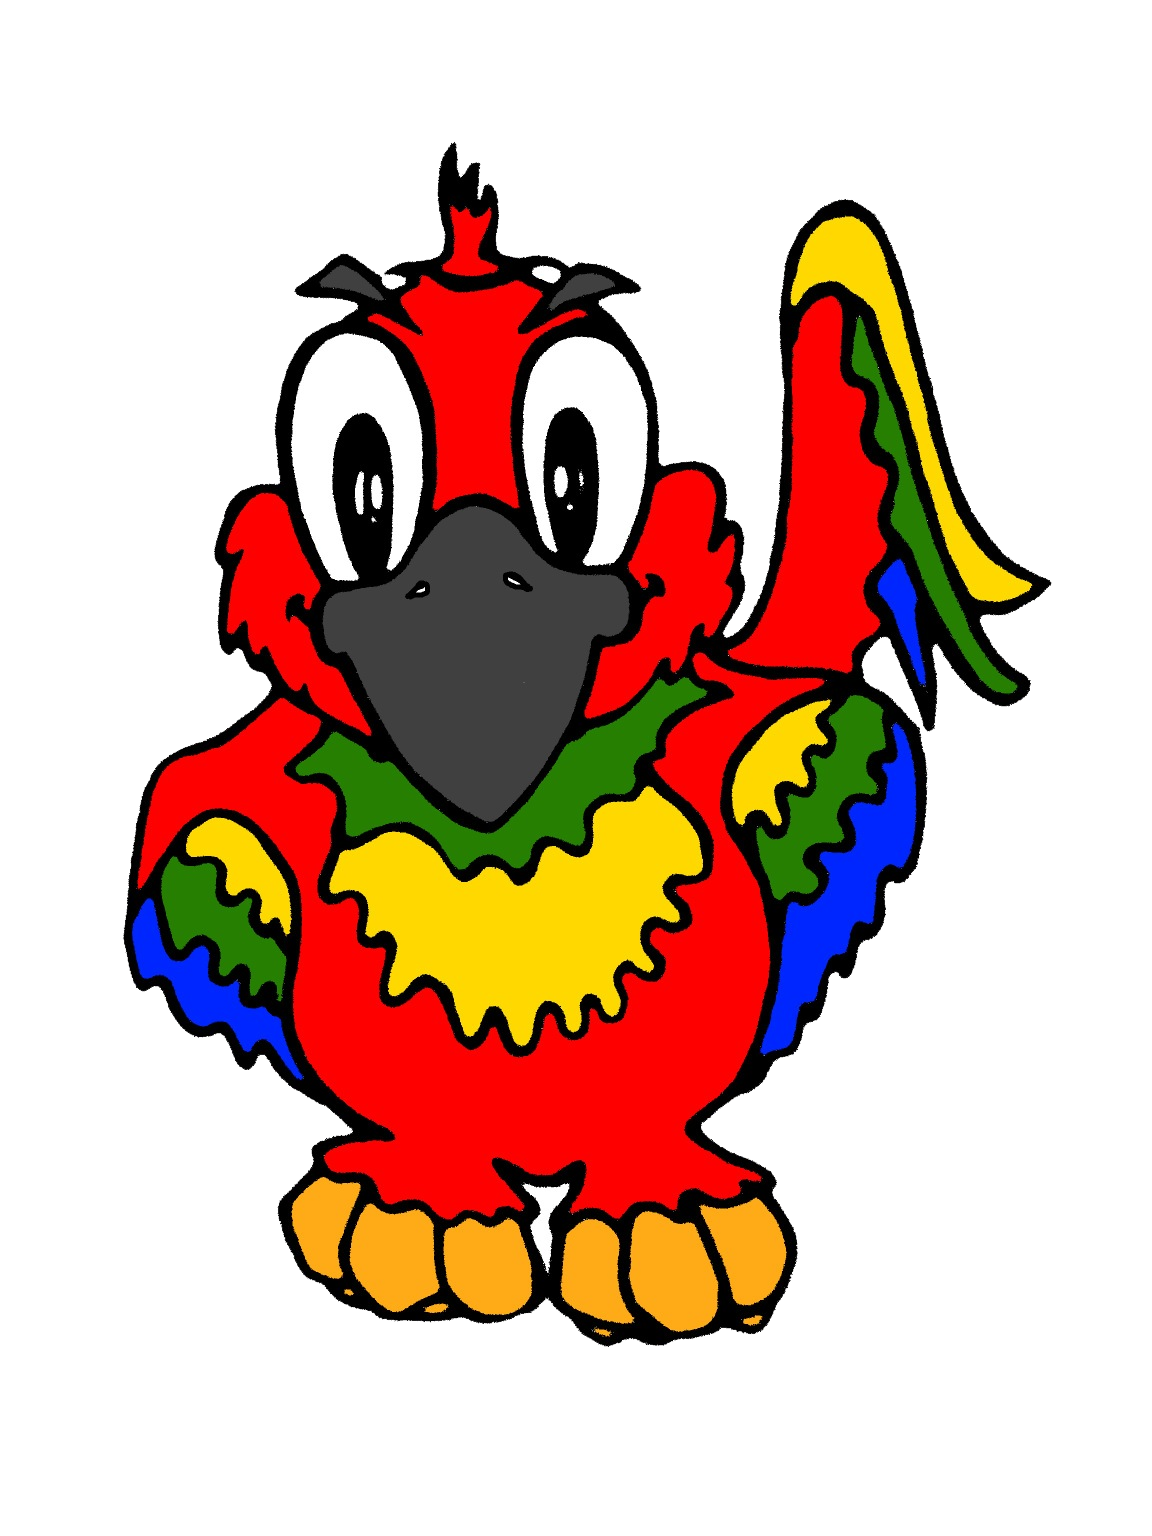 Download PNG image - Cute Parrot PNG Transparent Image 